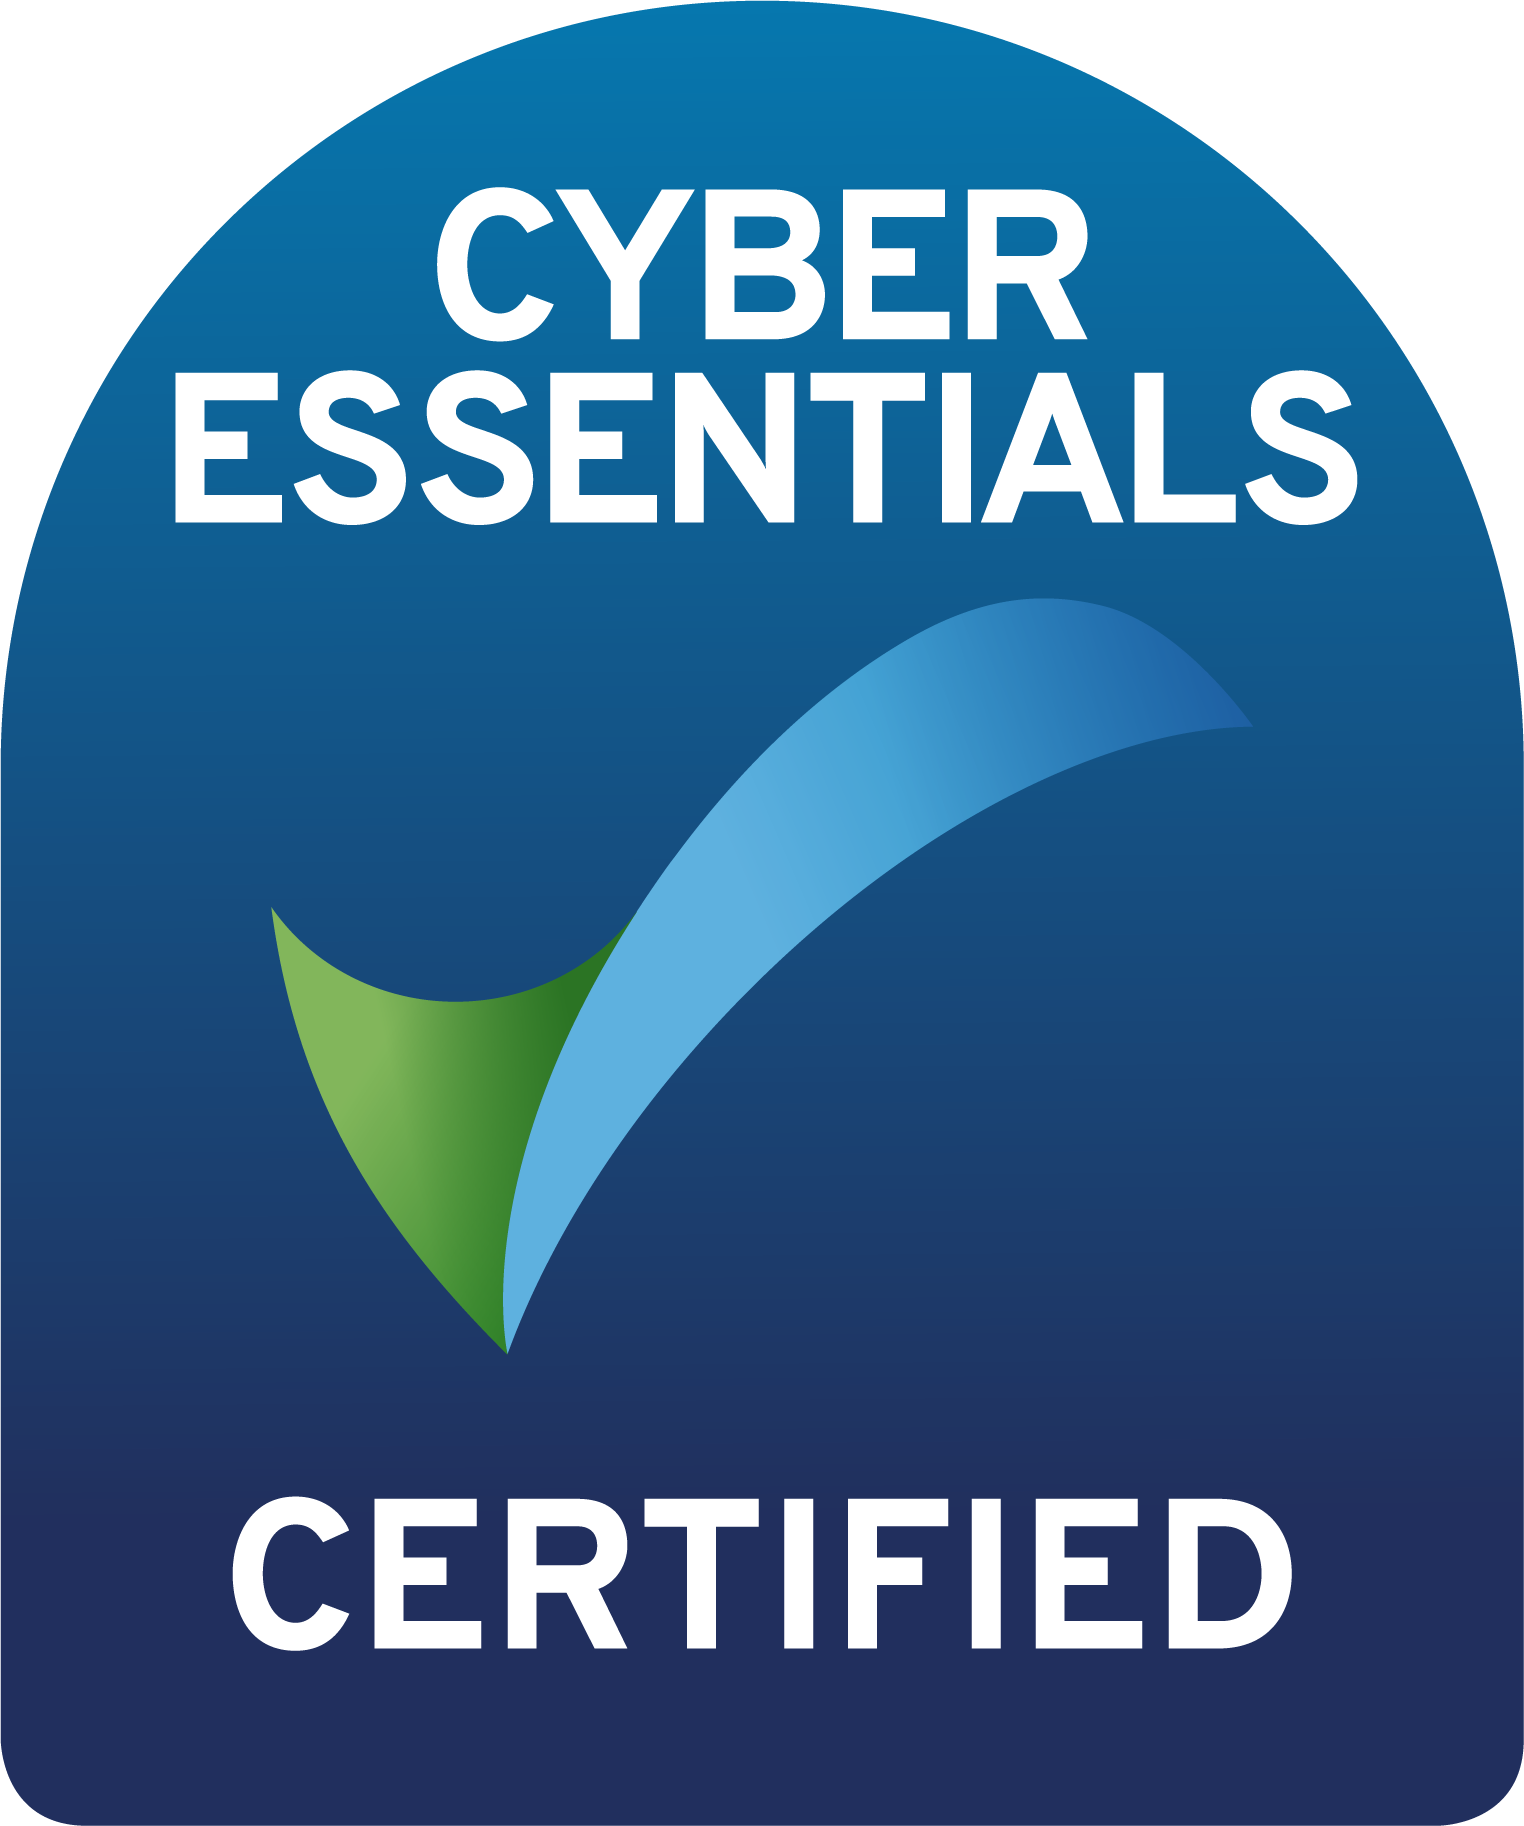 Cyber Essentials Certification Mark